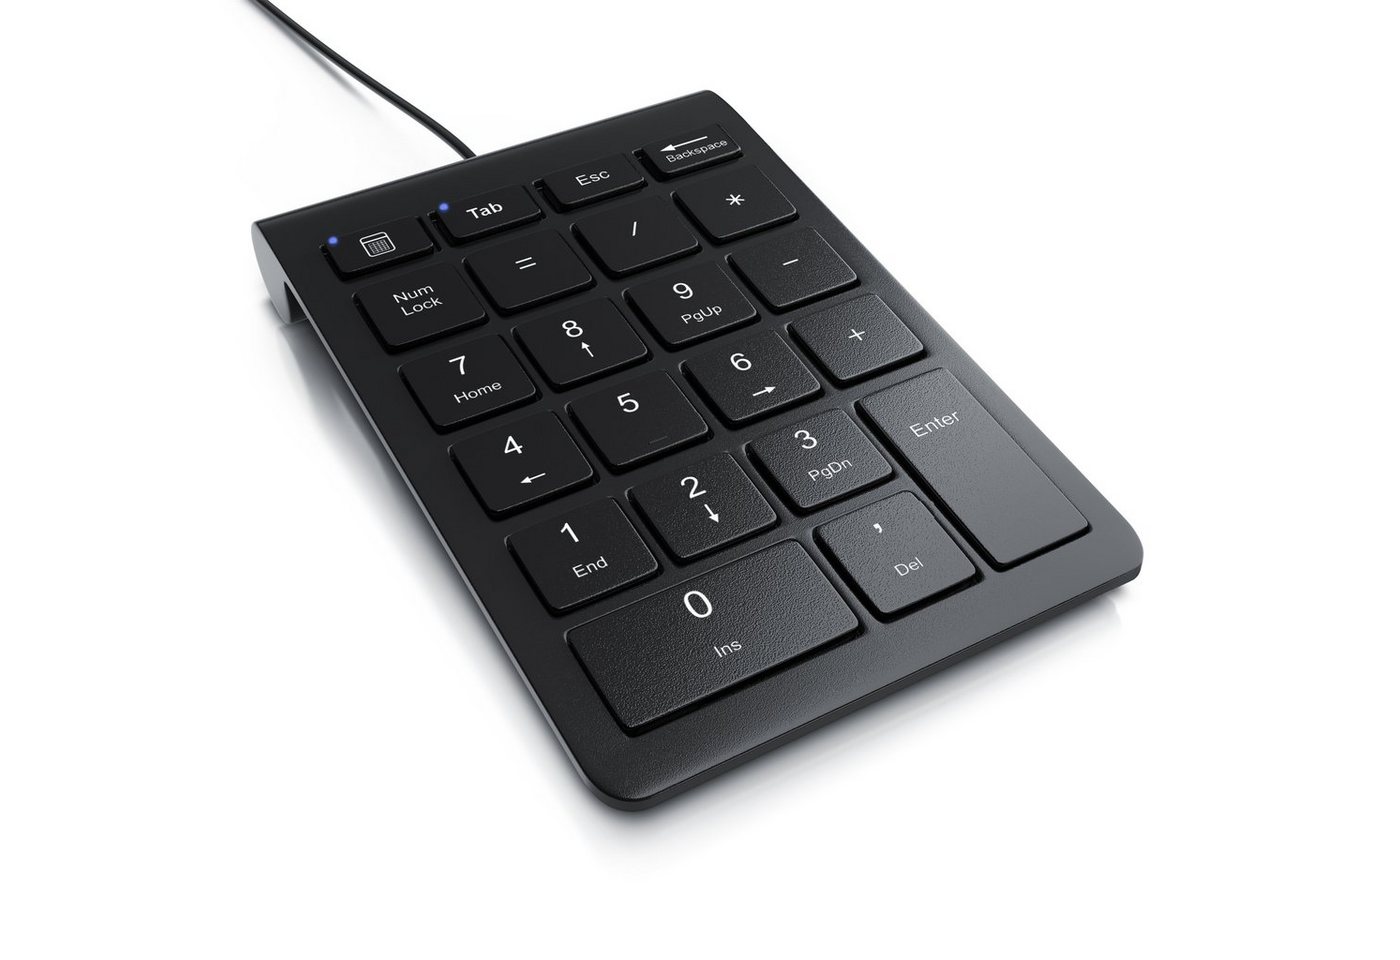 Aplic Tastatur (USB Keypad, Multimediatasten, rutschfest, vollständiges Numpad-Layout) von Aplic